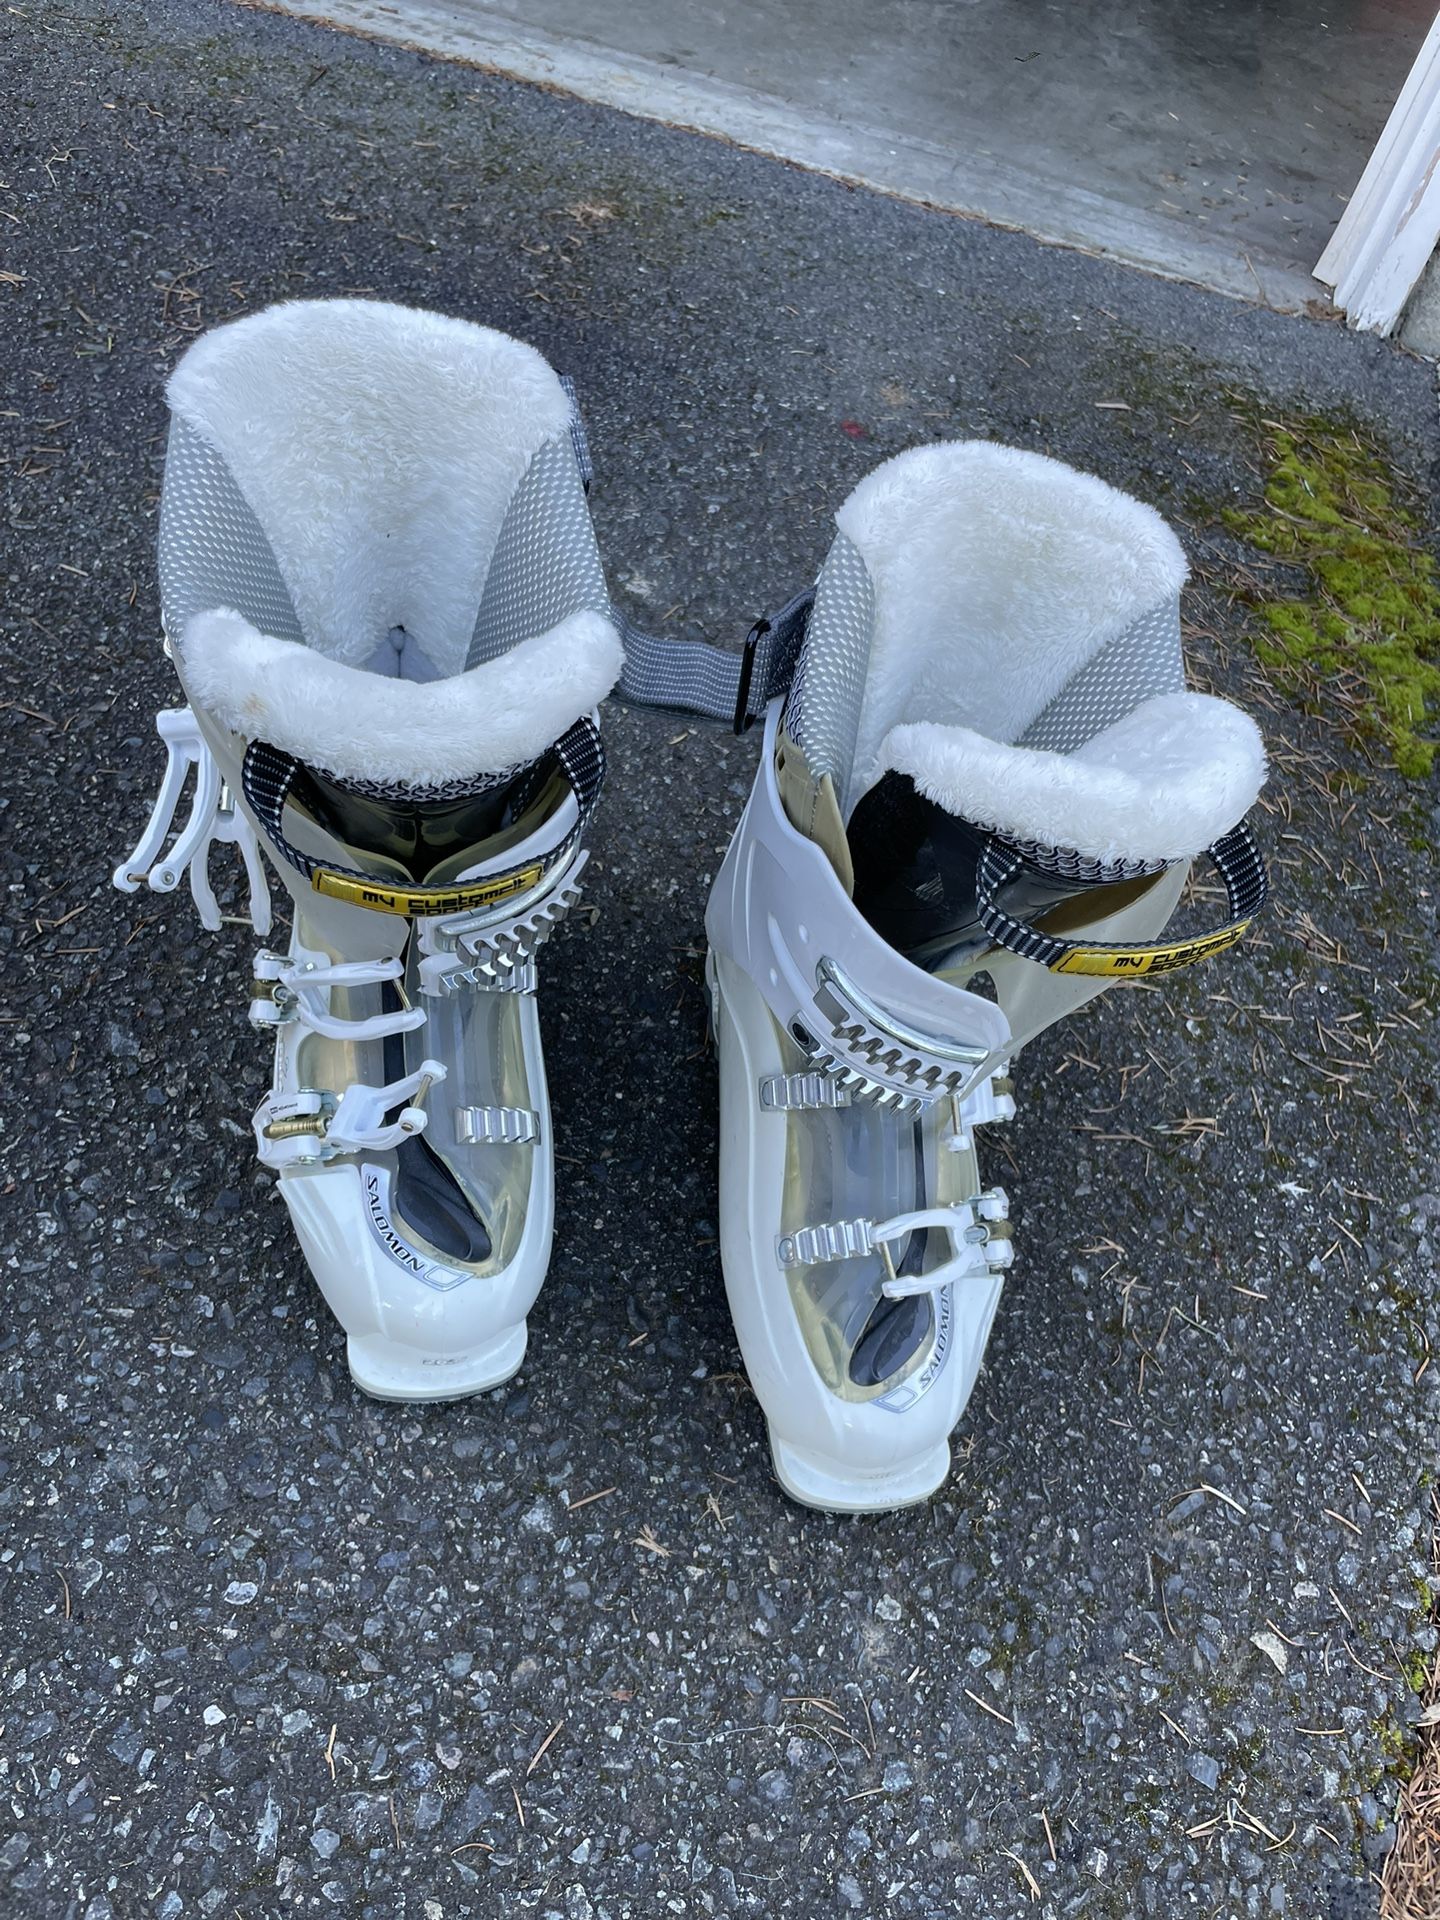 Salomon Women’s Ski Boots Size 26.5 (approximately 9.5 US)